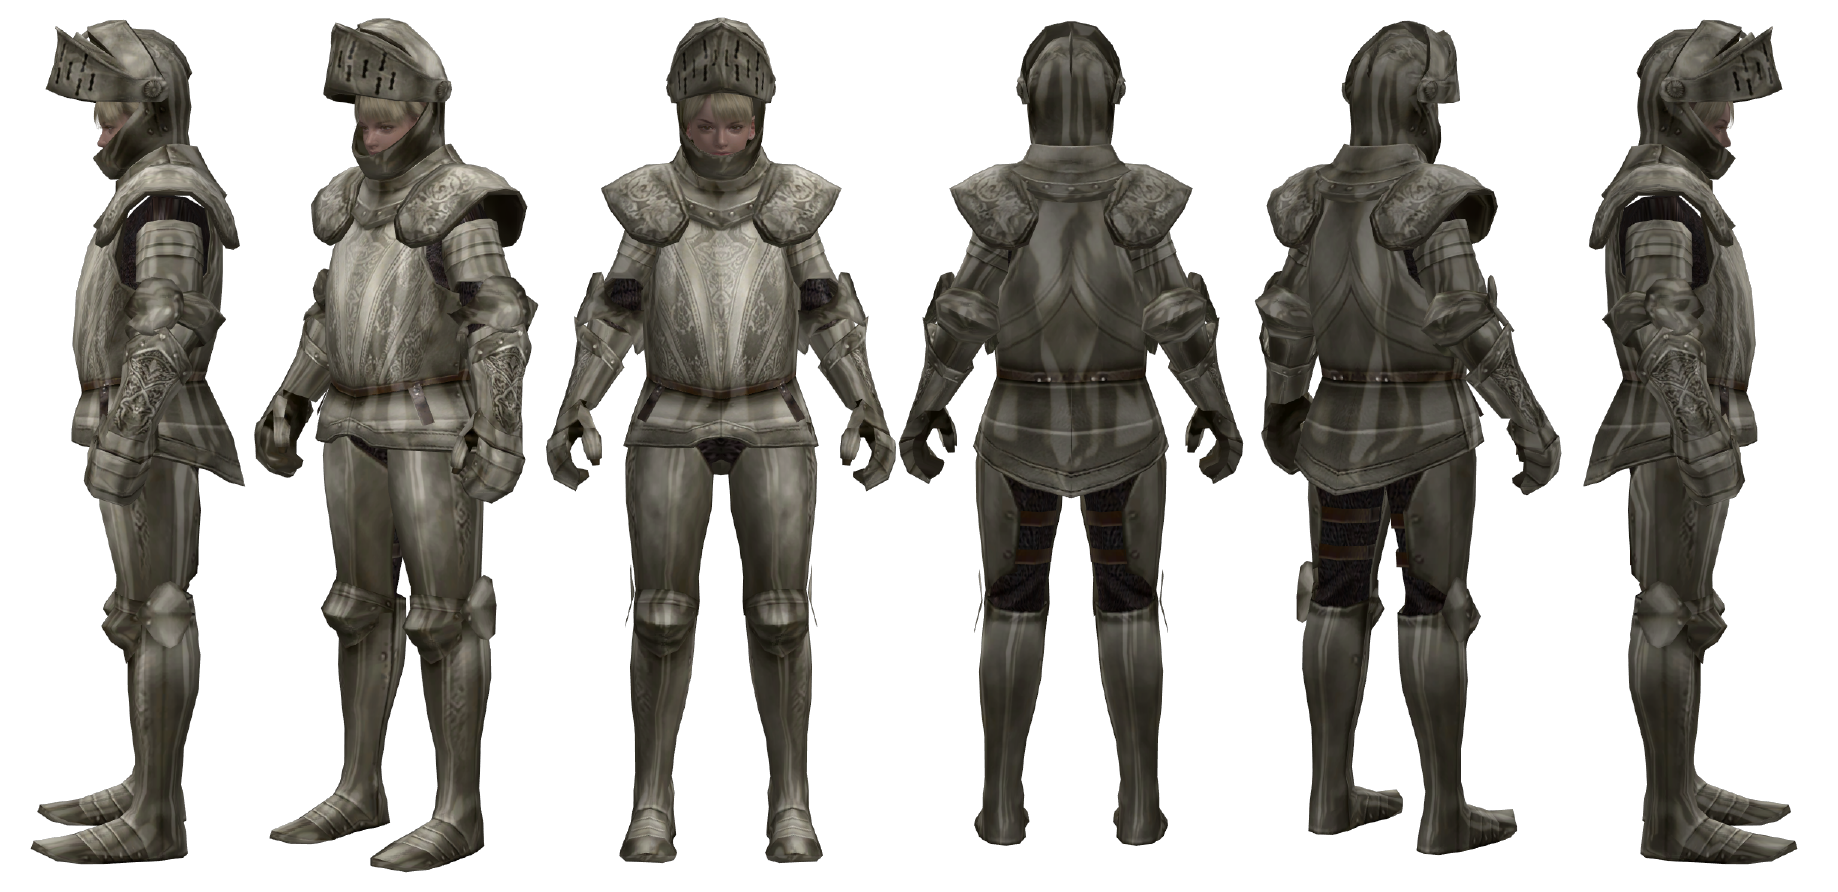 Ashley Graham (Armor, RE 4) by efrajoey1 on DeviantArt